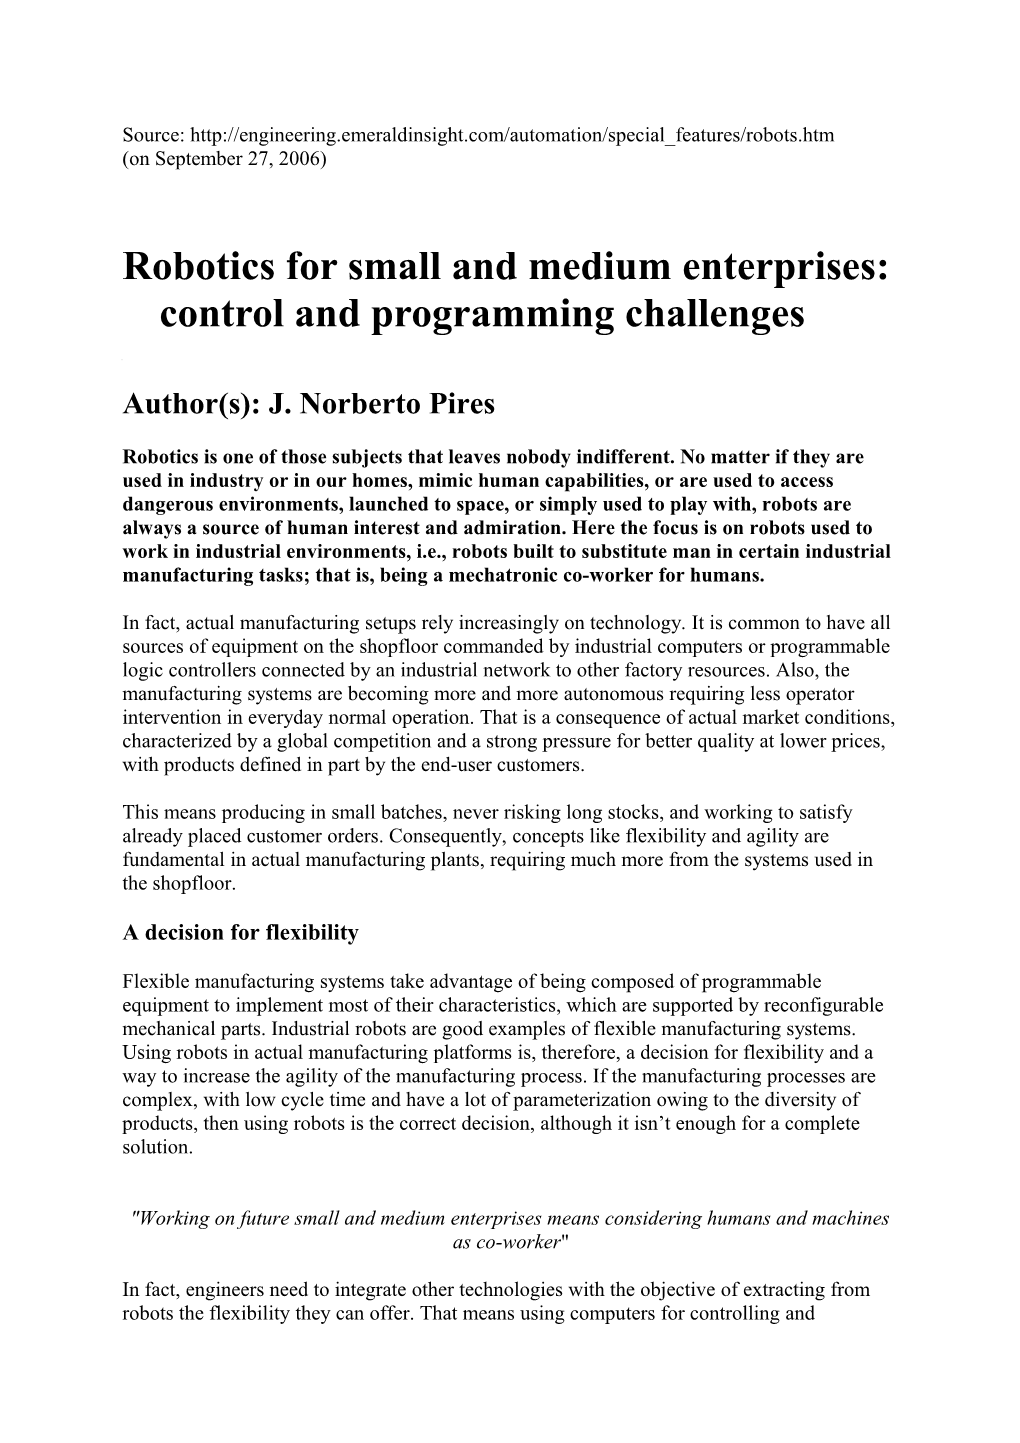 Robotics for Small and Medium Enterprises: Control and Programming Challenges